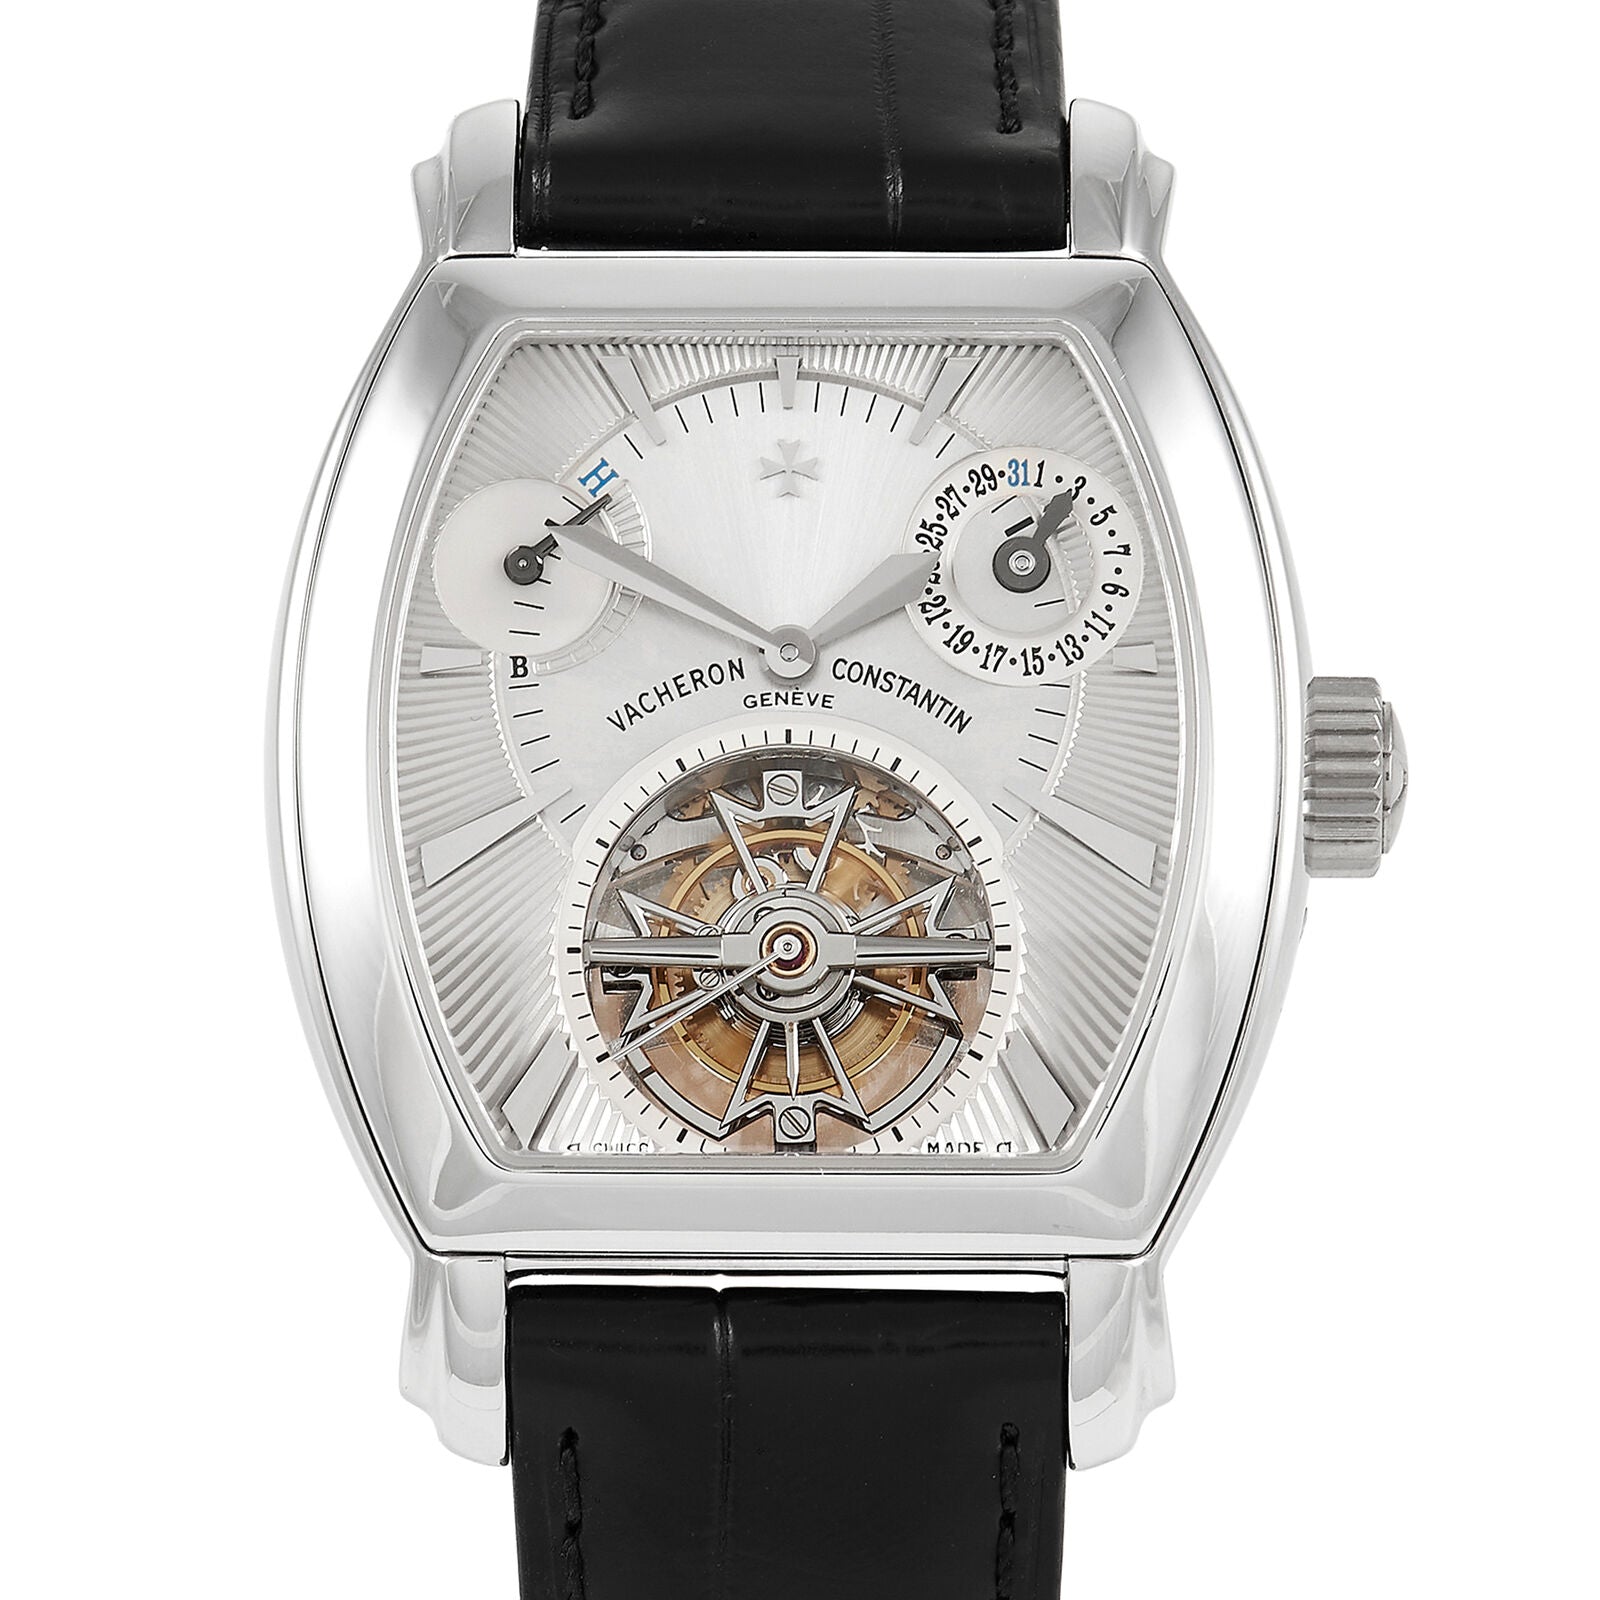 162294-5001 Chopard L.U.C XP Tonneau Mens Solid Rose Gold Chronometer Watch  - BRAND NEW